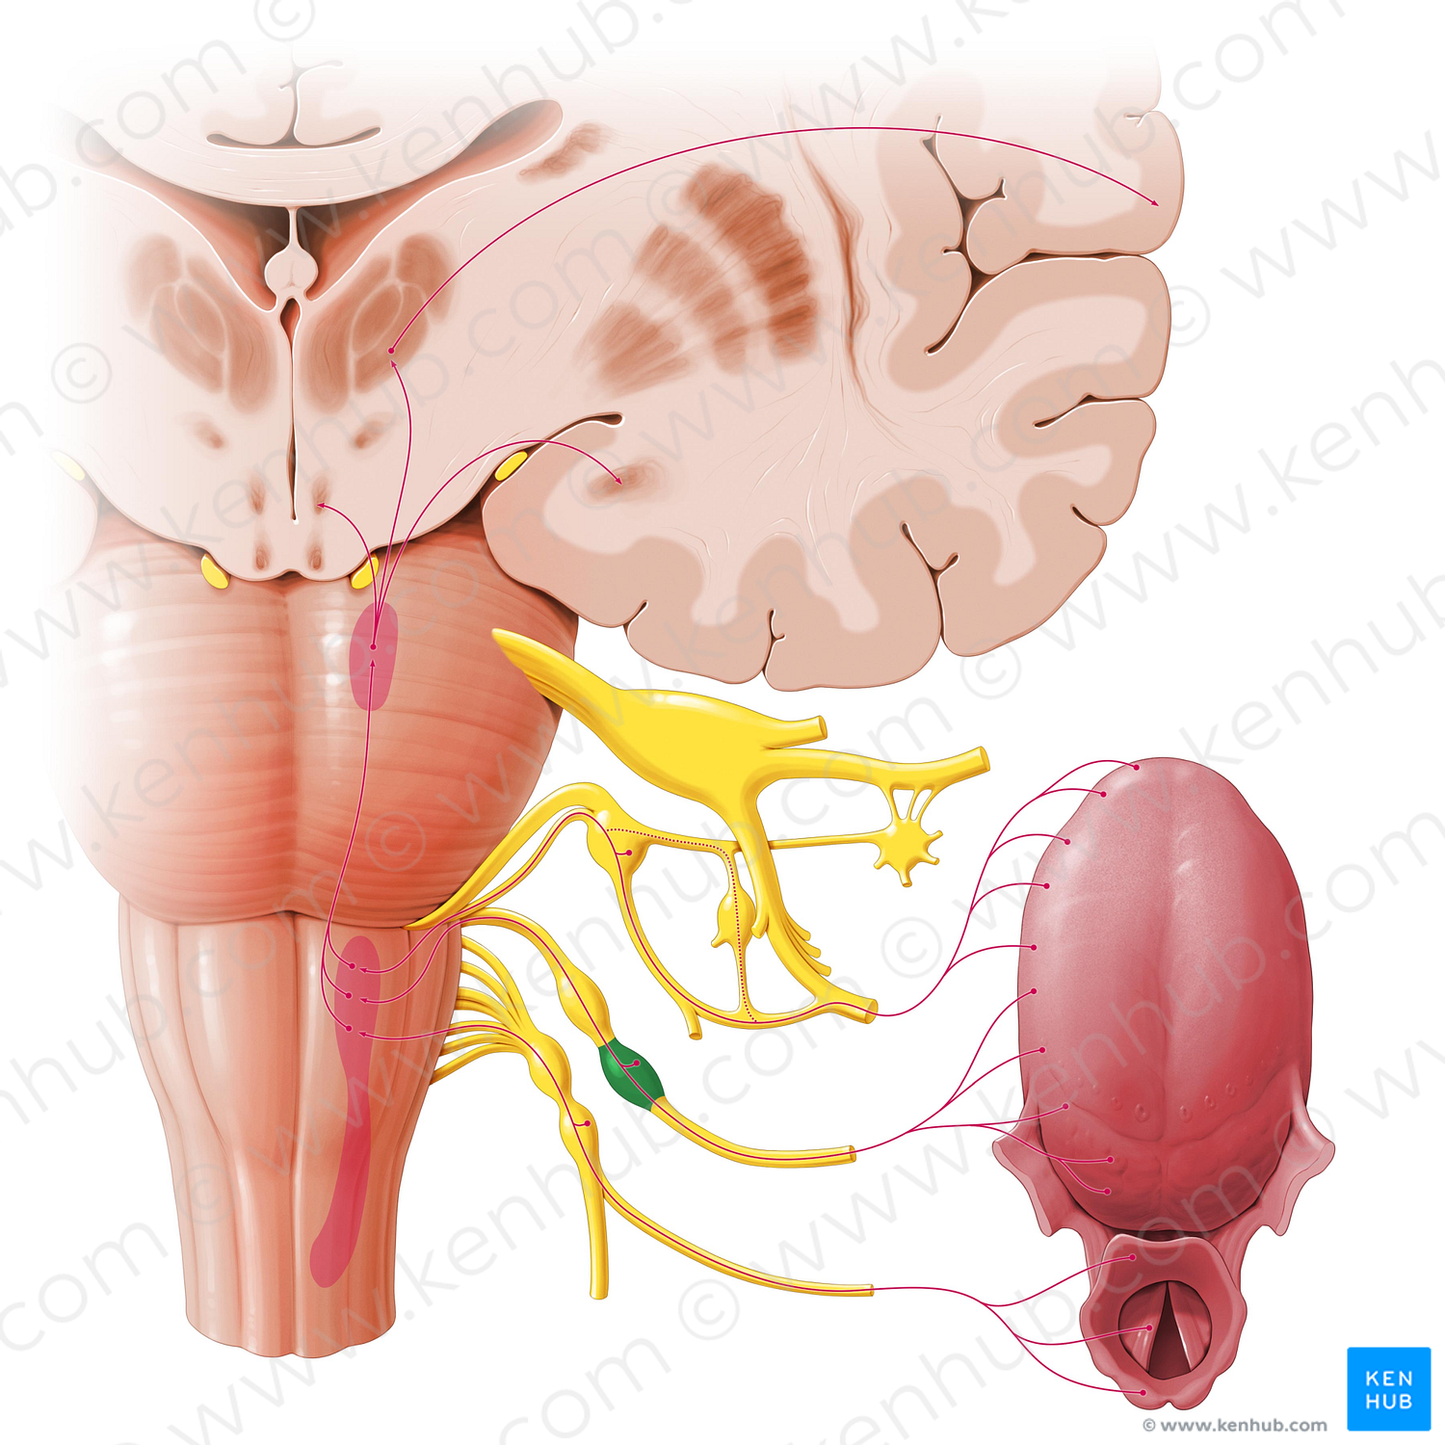 Inferior ganglion of glossopharyngeal nerve (#3998)